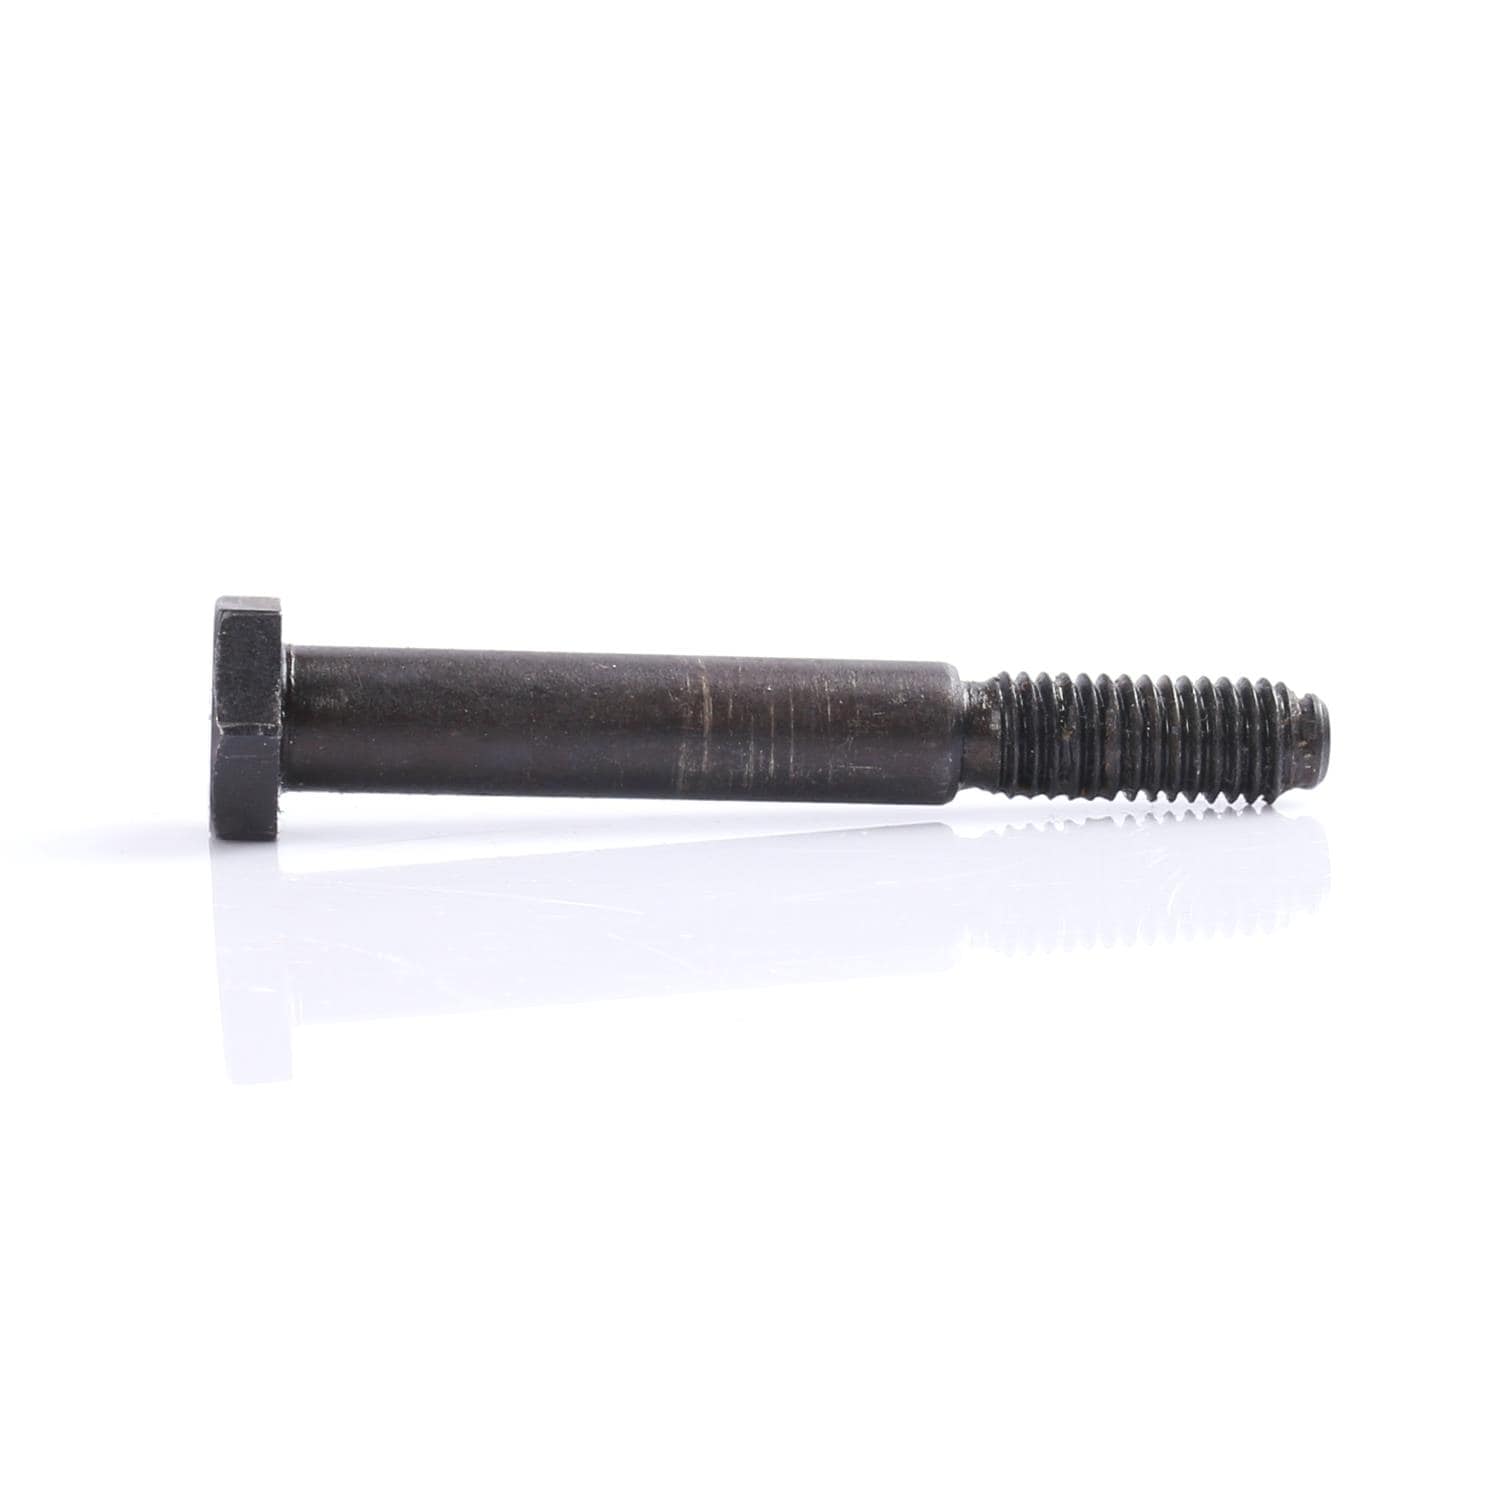 Pedal screw, long 60mm